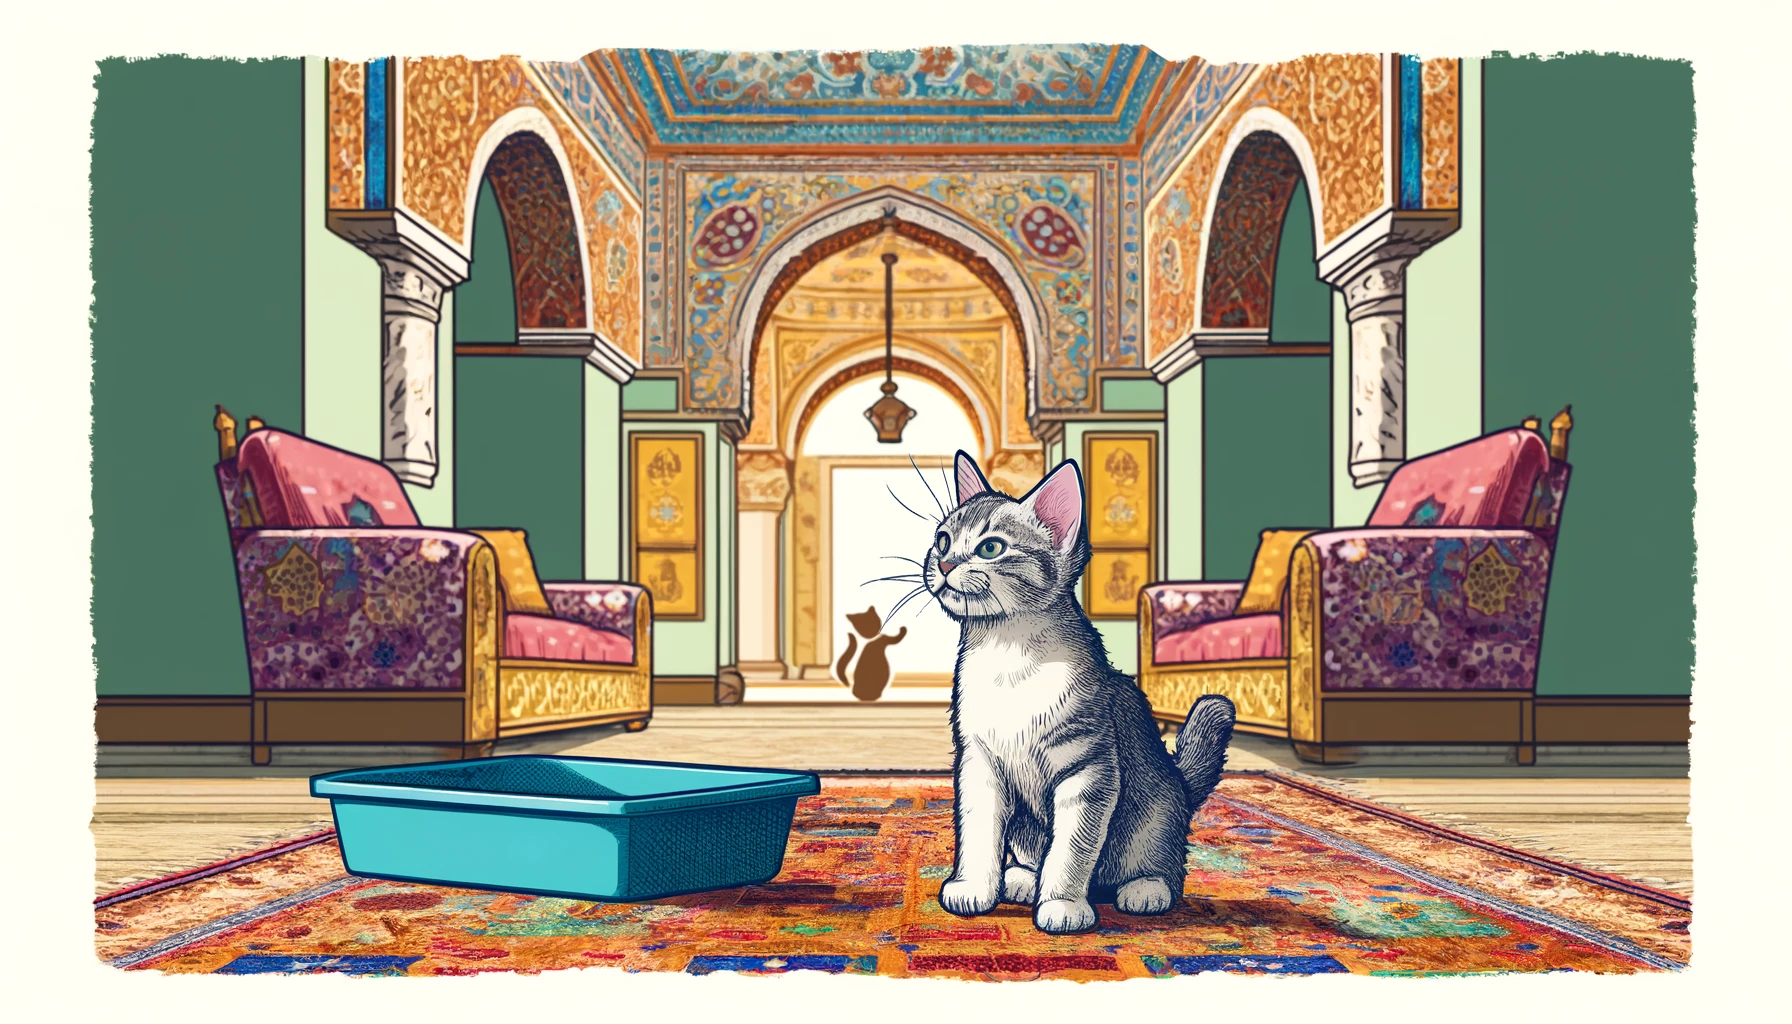 Cartoon depiction of a cat sensing how far away its litter box is in an Ottoman art styled room.